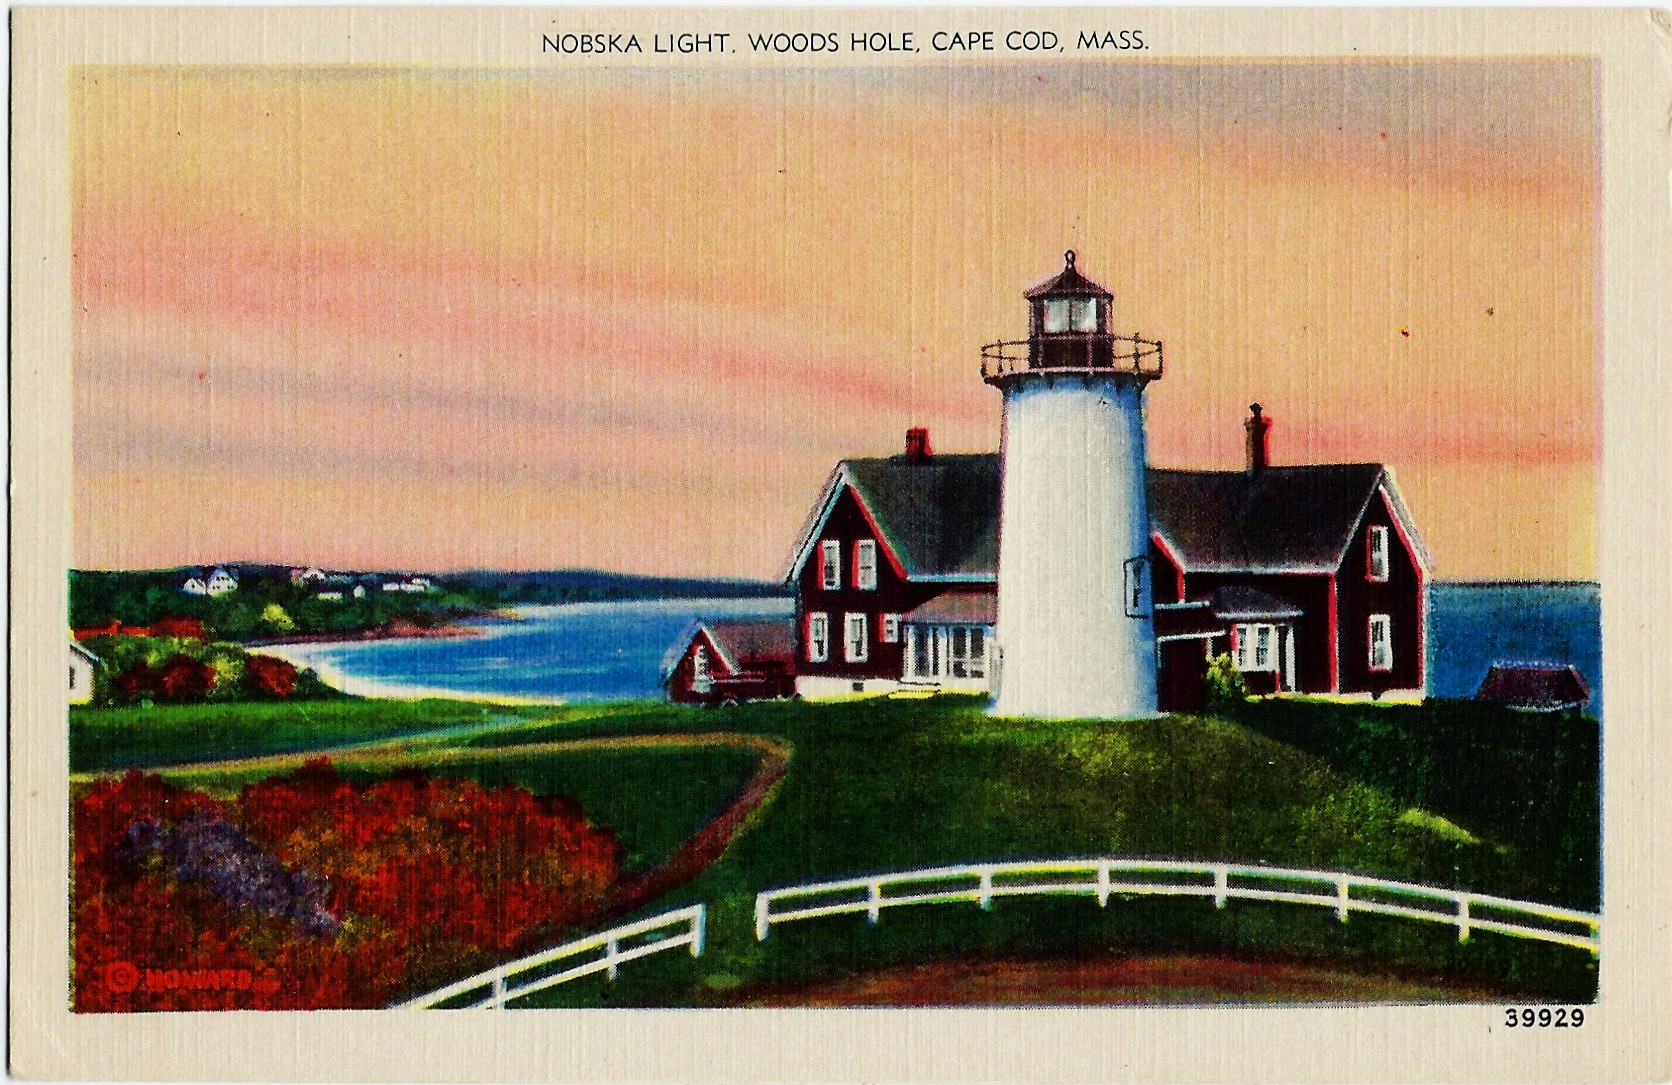 Nobska Woods Hole, Cape Cod, MASS.Postcard 39929 (MA)